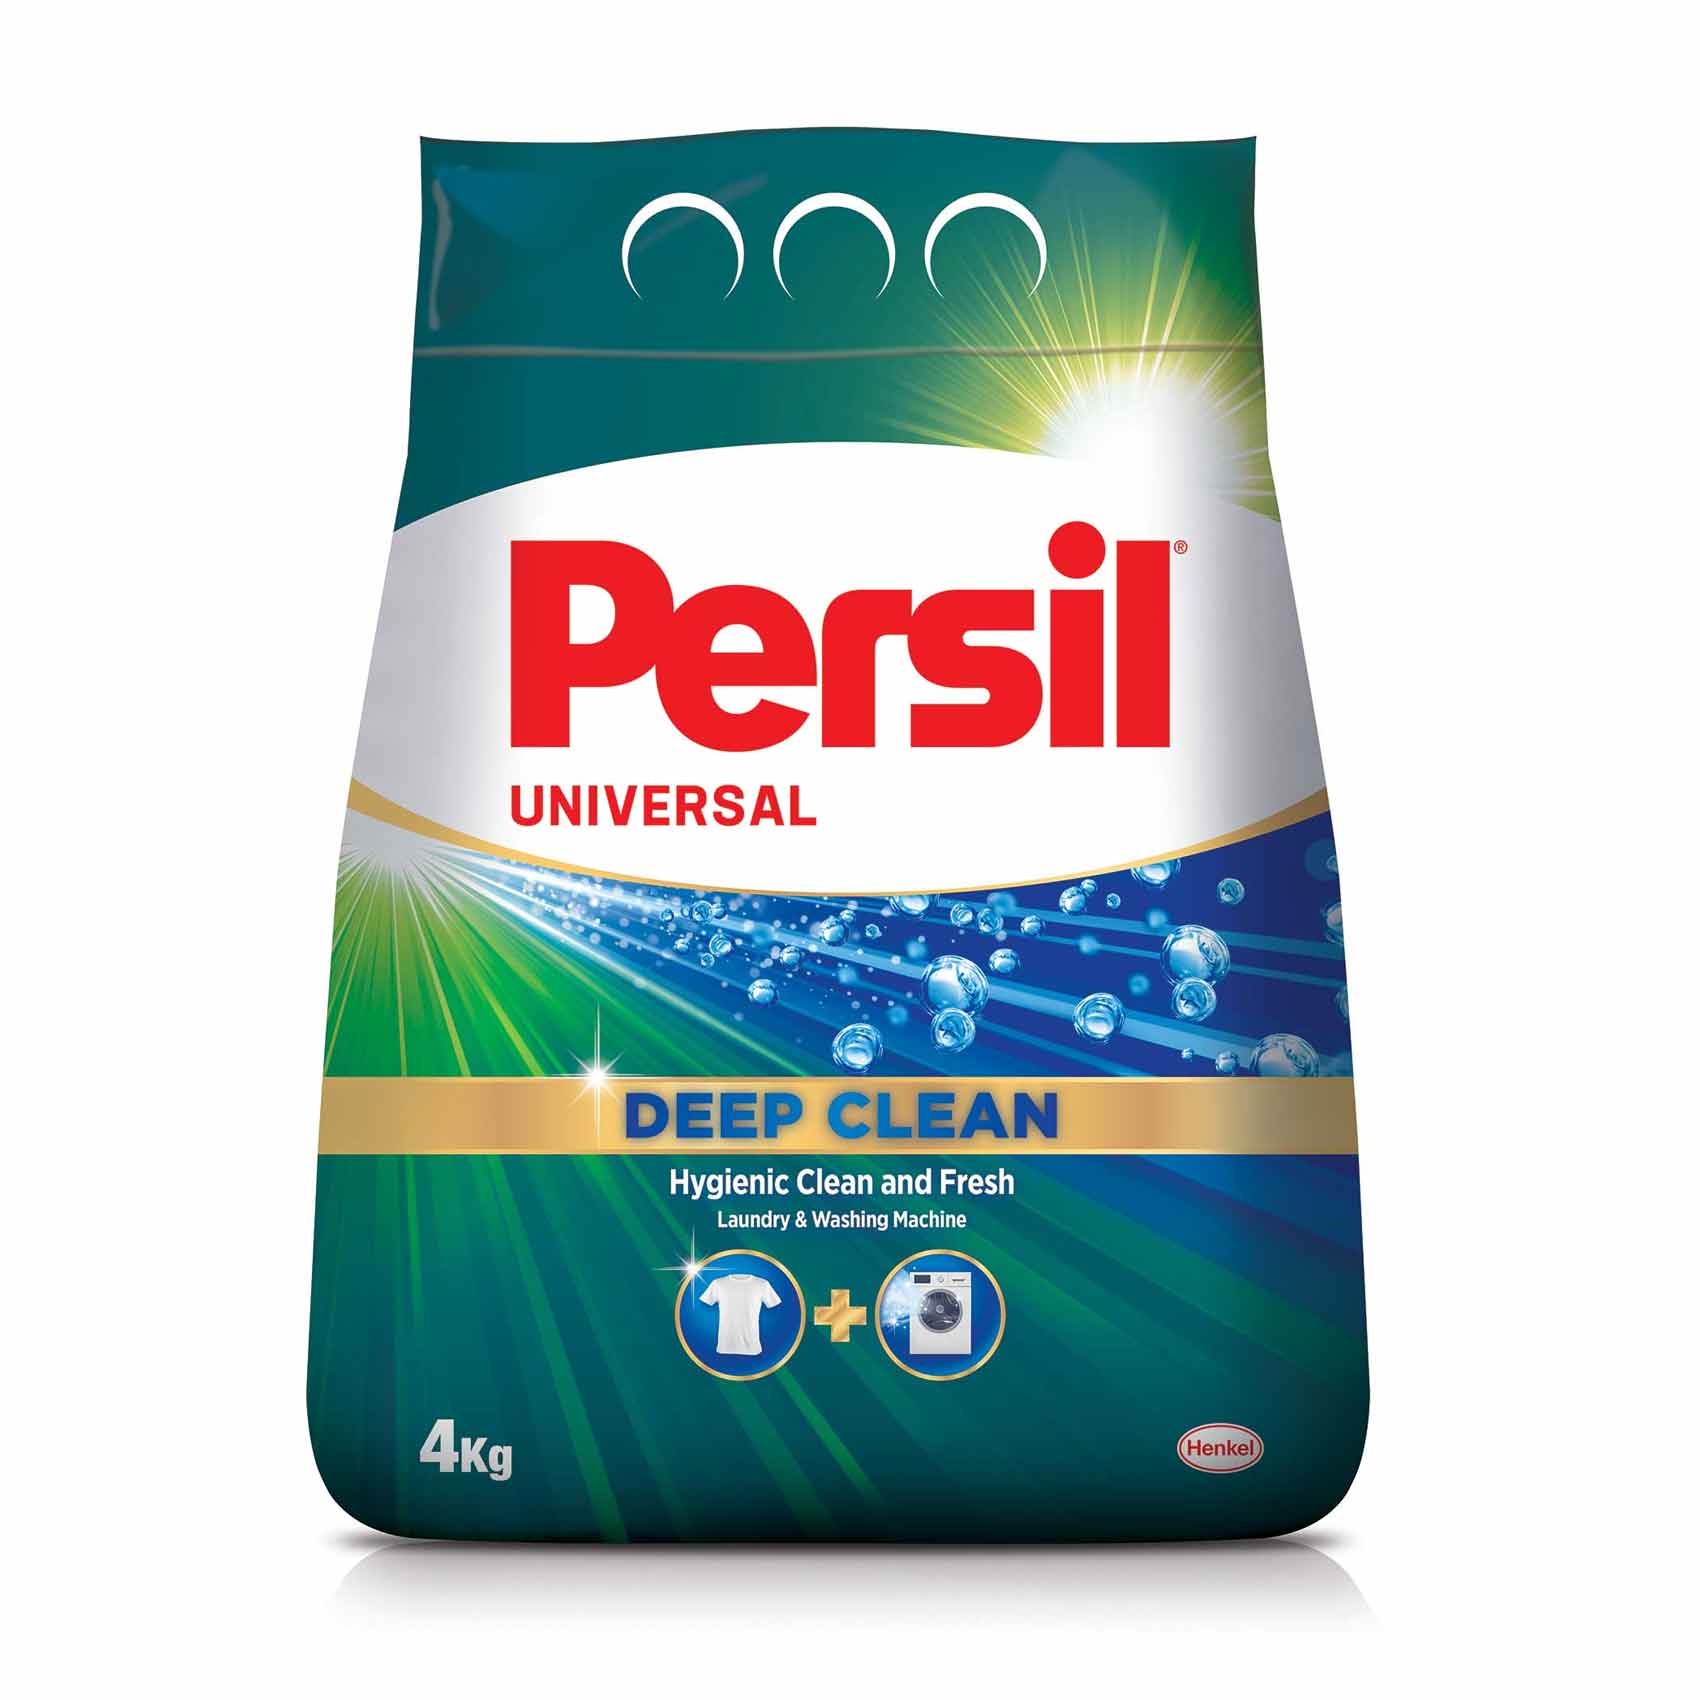 Persil Universal Powder Laundry Detergent Laundry Detergent Powder With Deep Clean Plus Technol